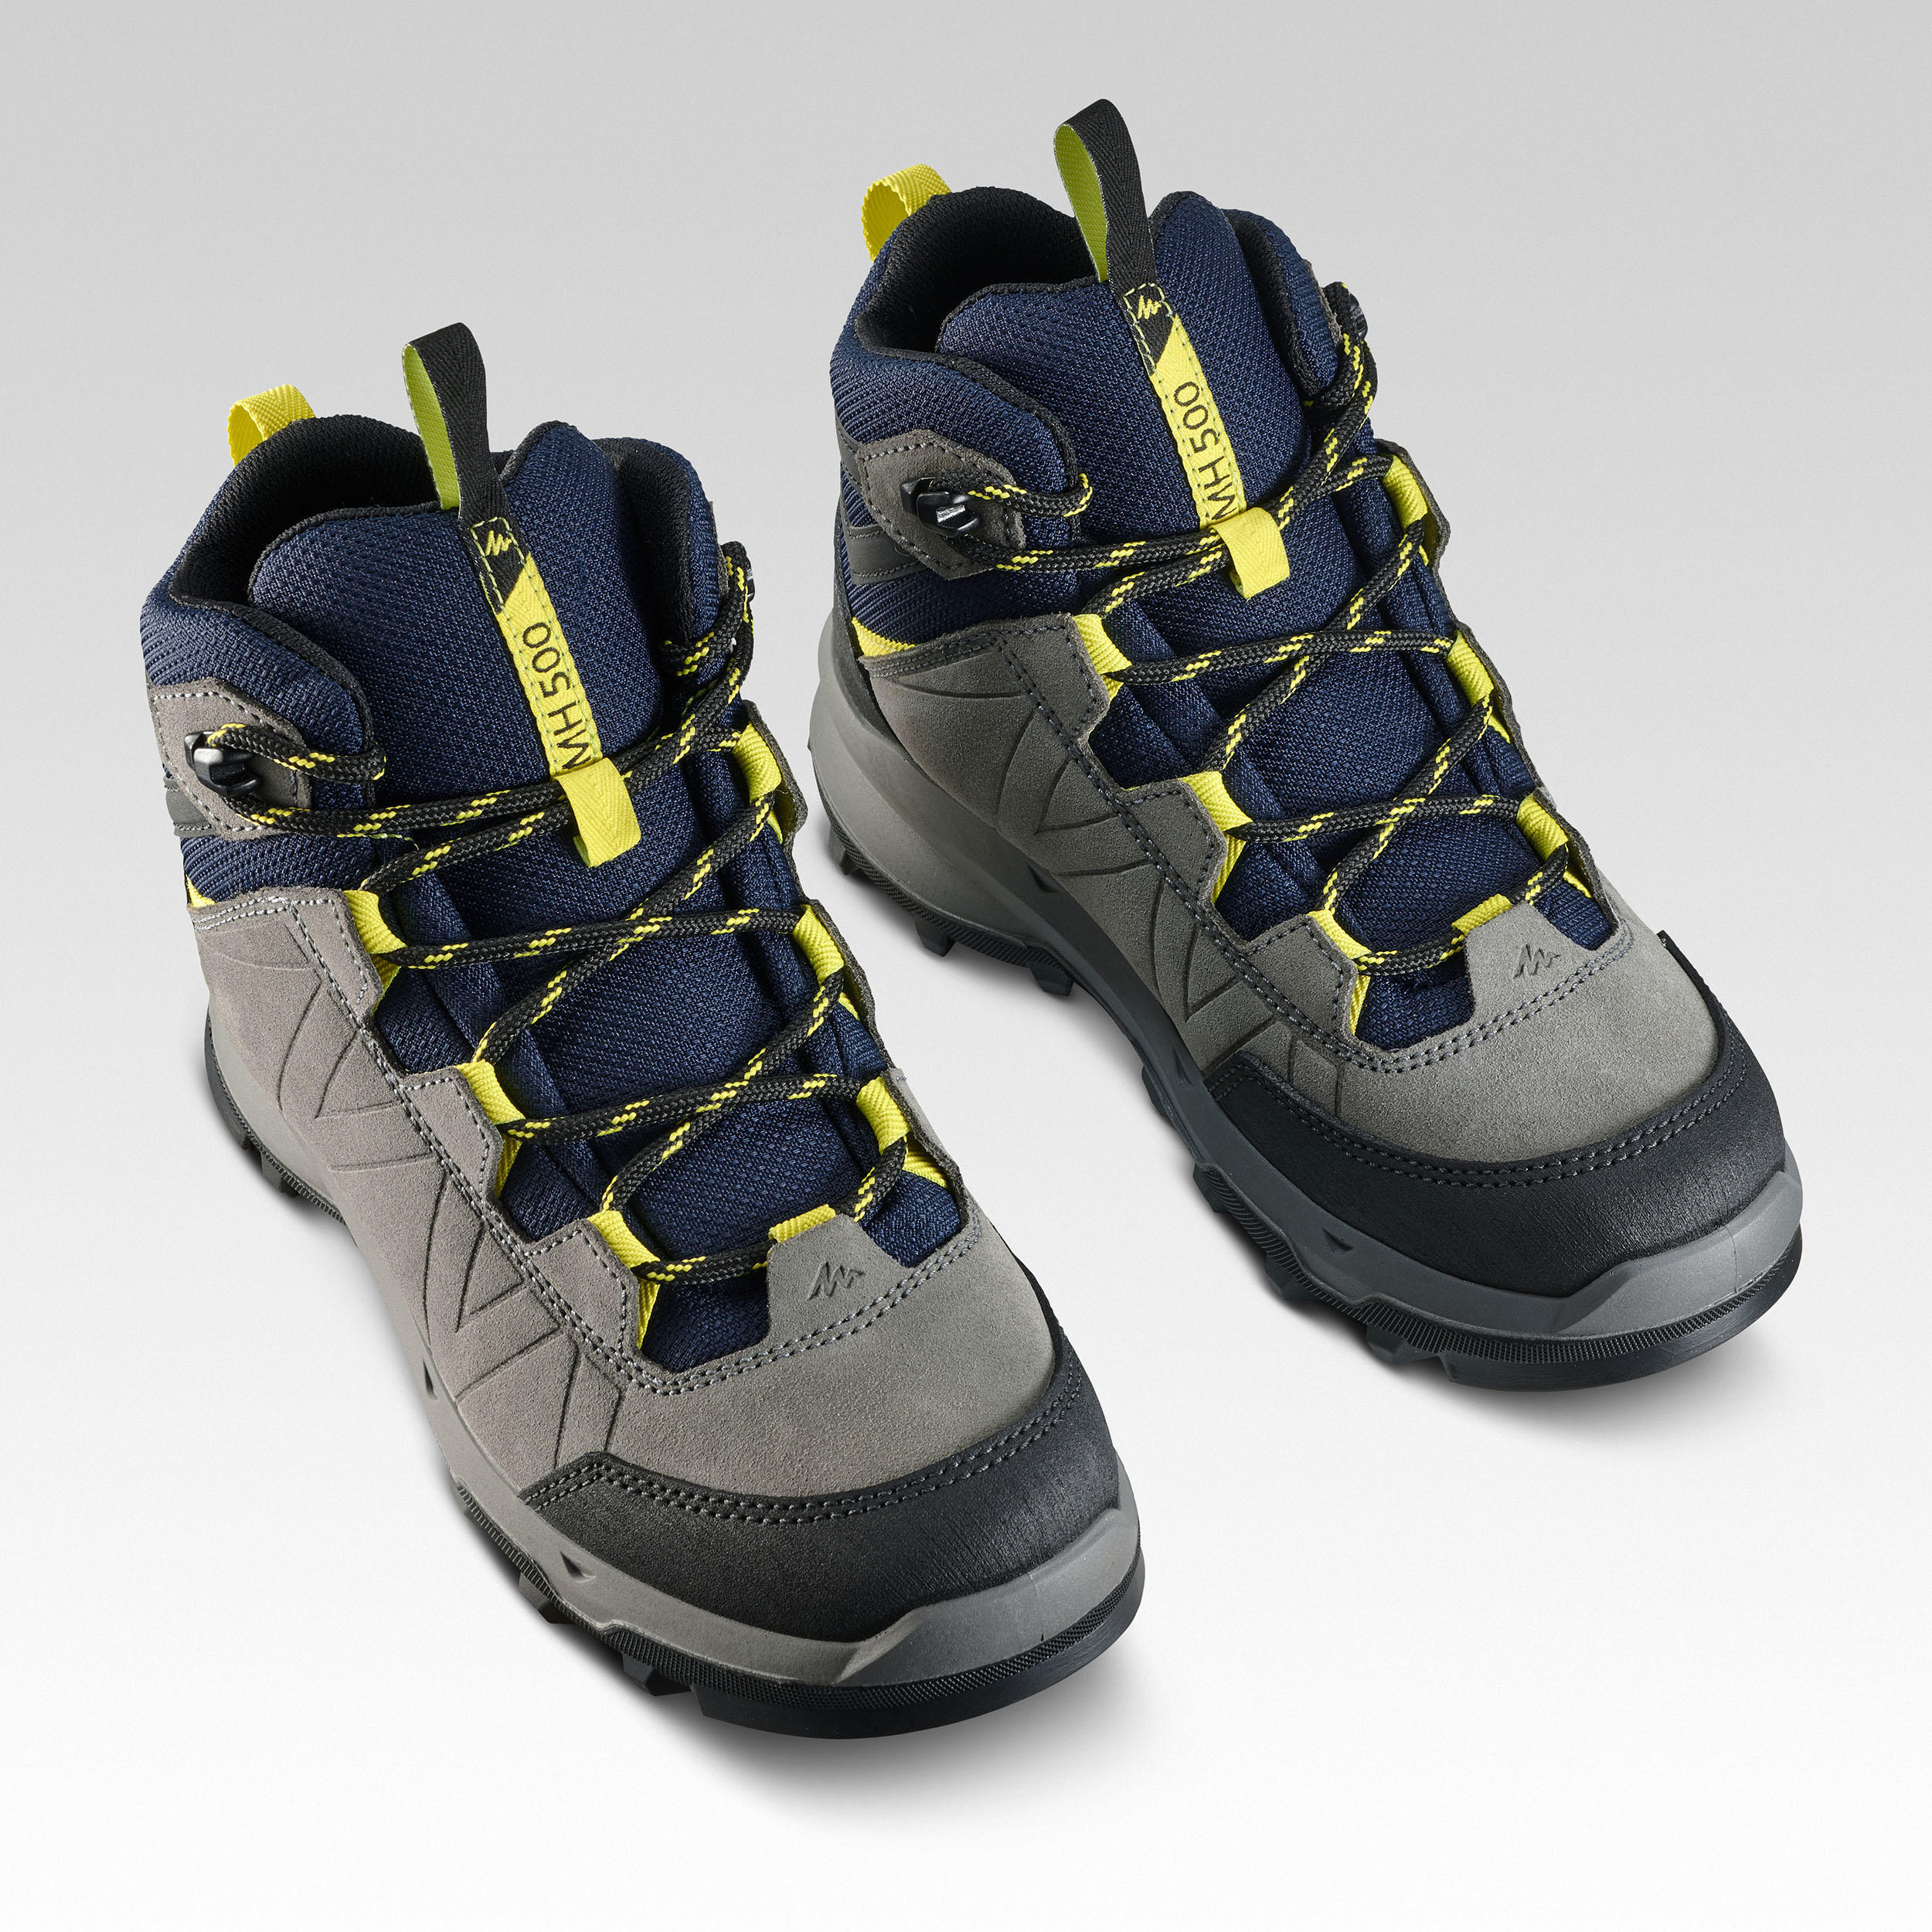 Kids’ Waterproof Mountain Walking Boots - MH500 Sizes 10-6 6/8